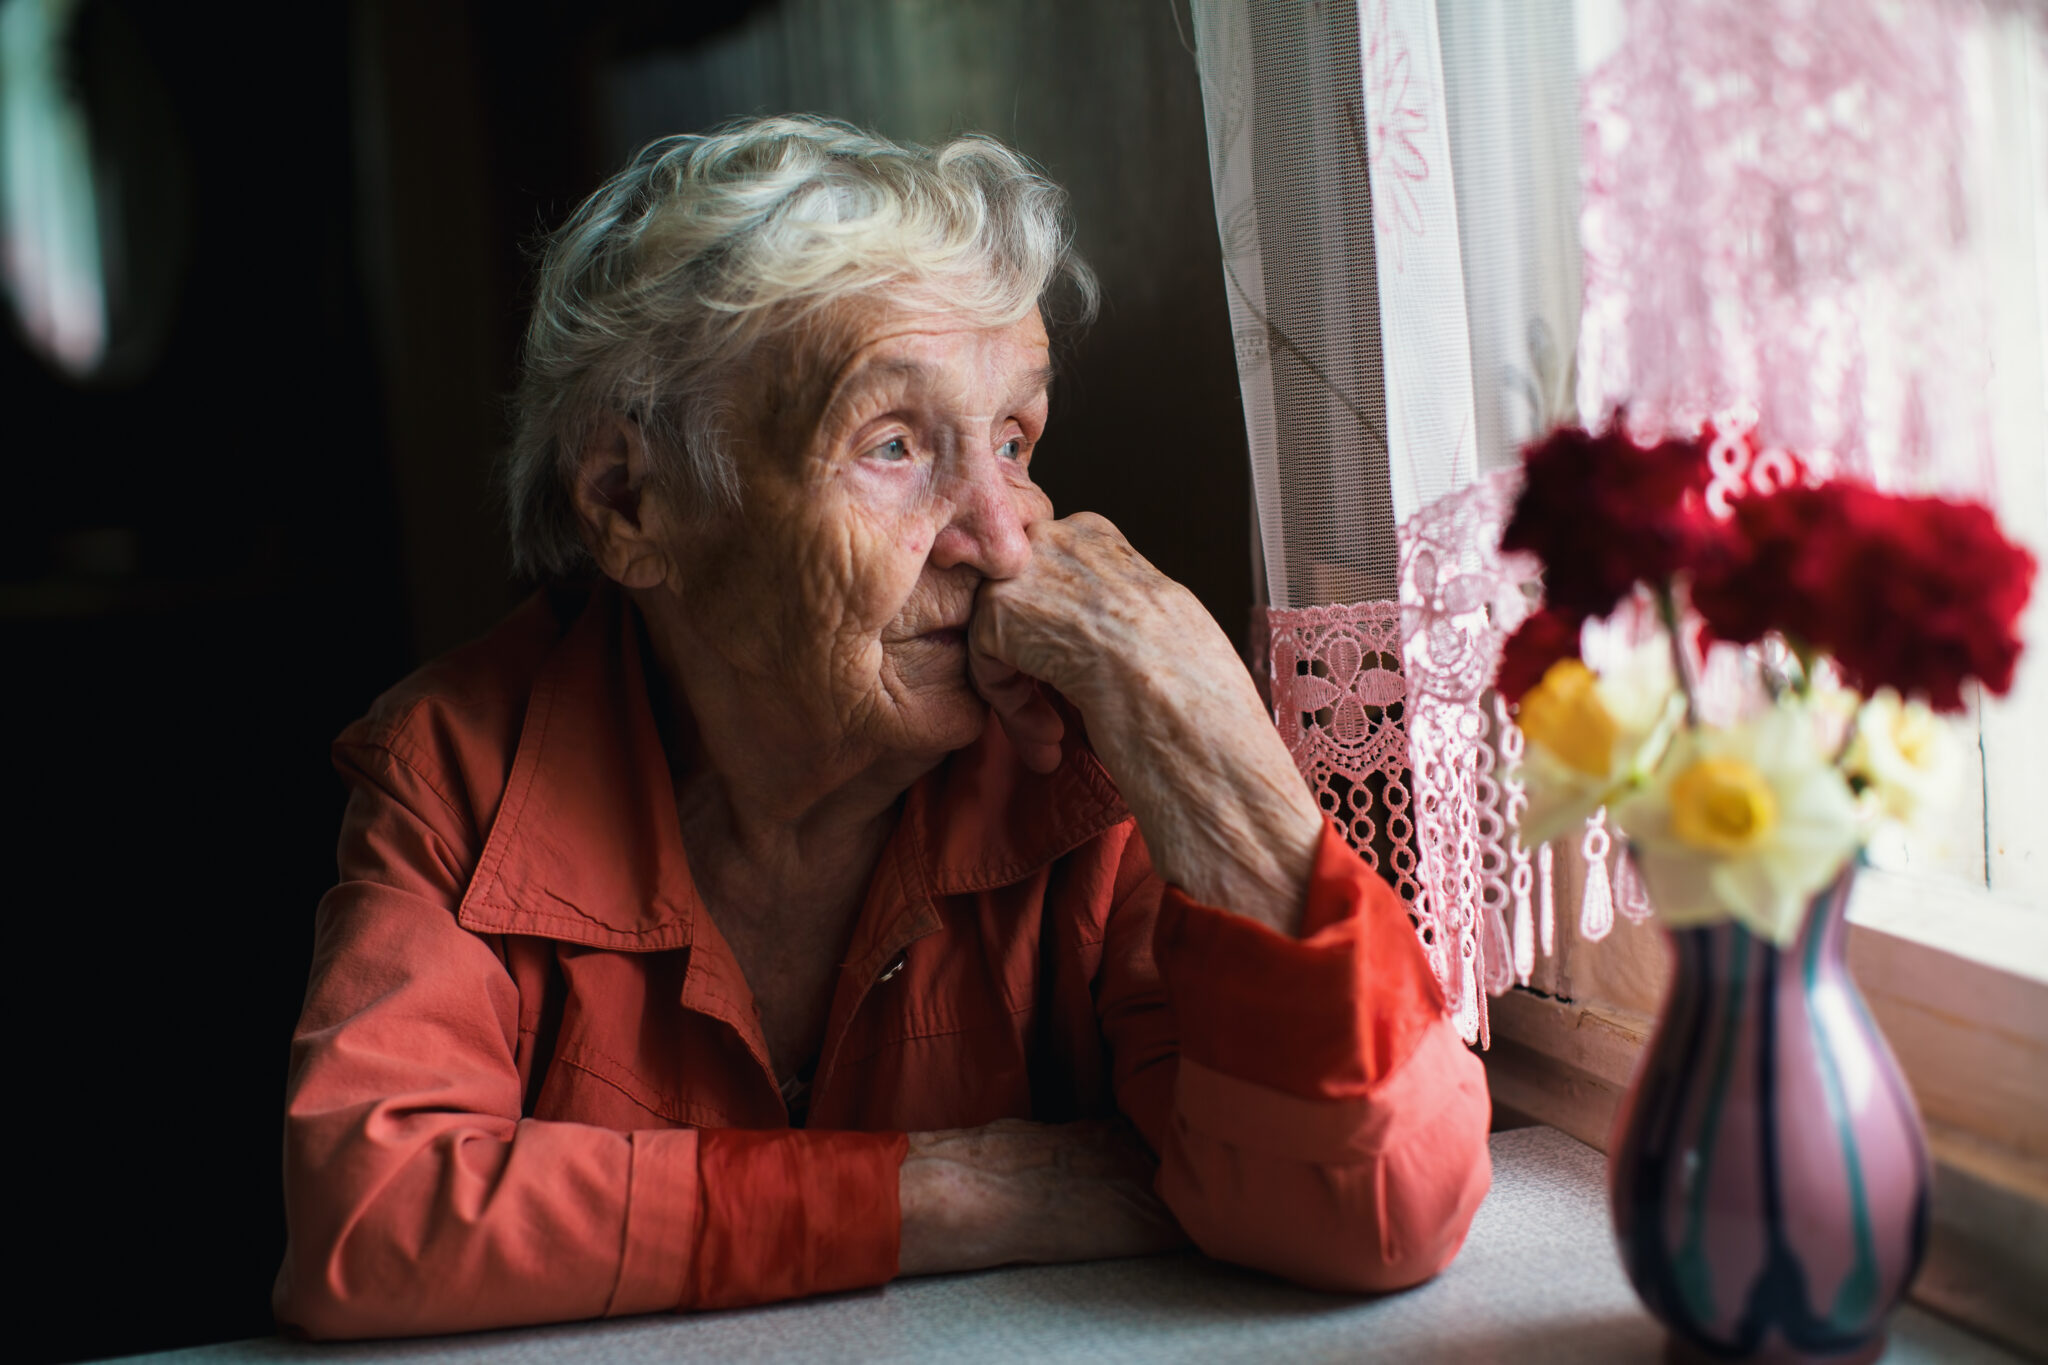 ICT tools to combat loneliness in the elderly